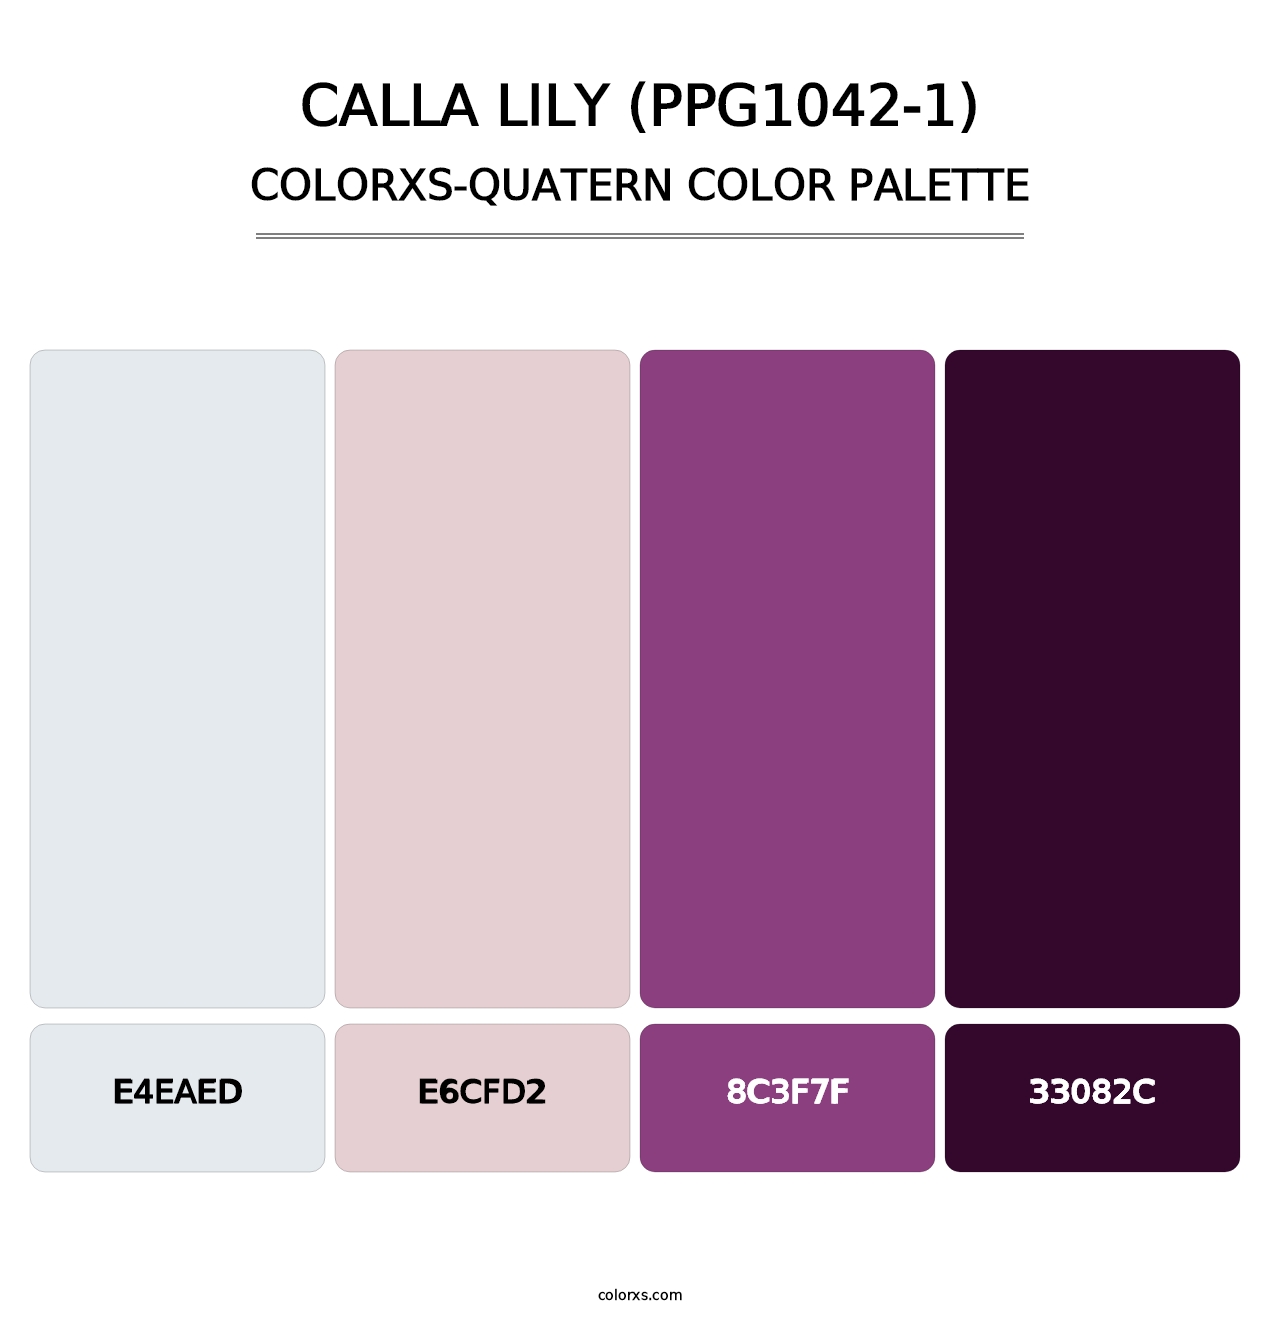 Calla Lily (PPG1042-1) - Colorxs Quatern Palette